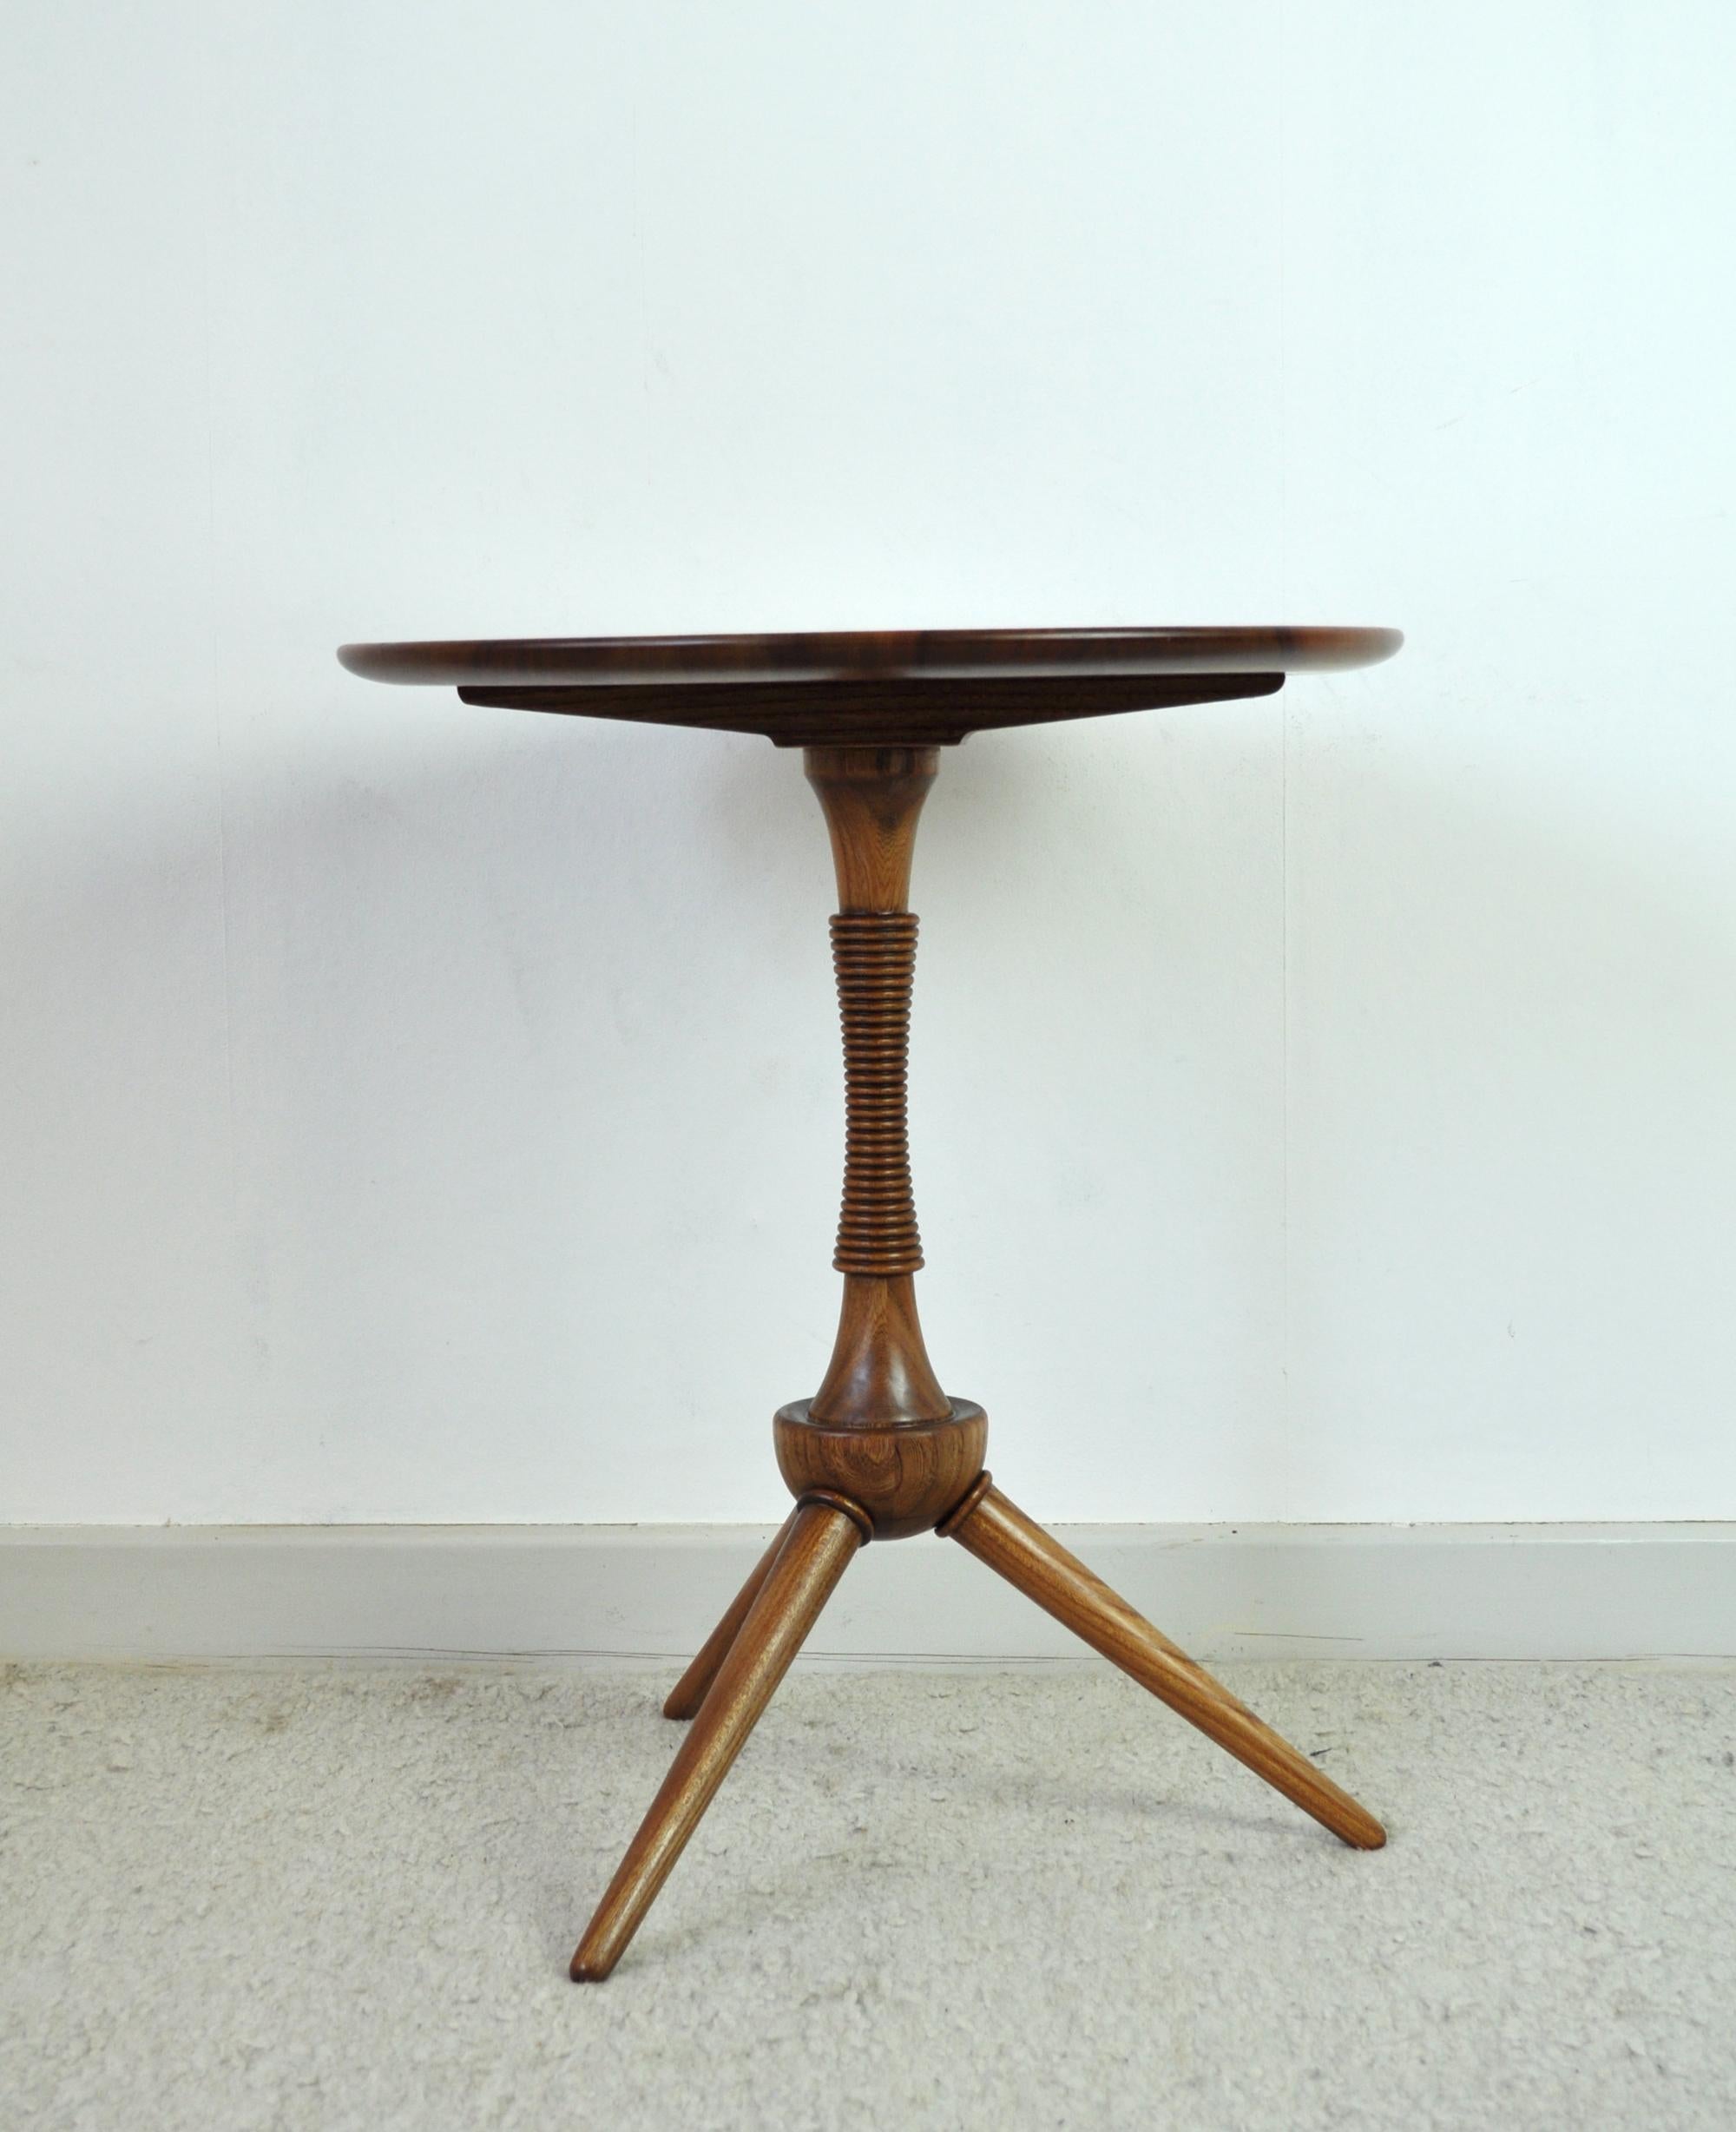 Scandinavian Modern Danish Side Table in Solid Mahogany by Cabinetmaker Frits Henningsen